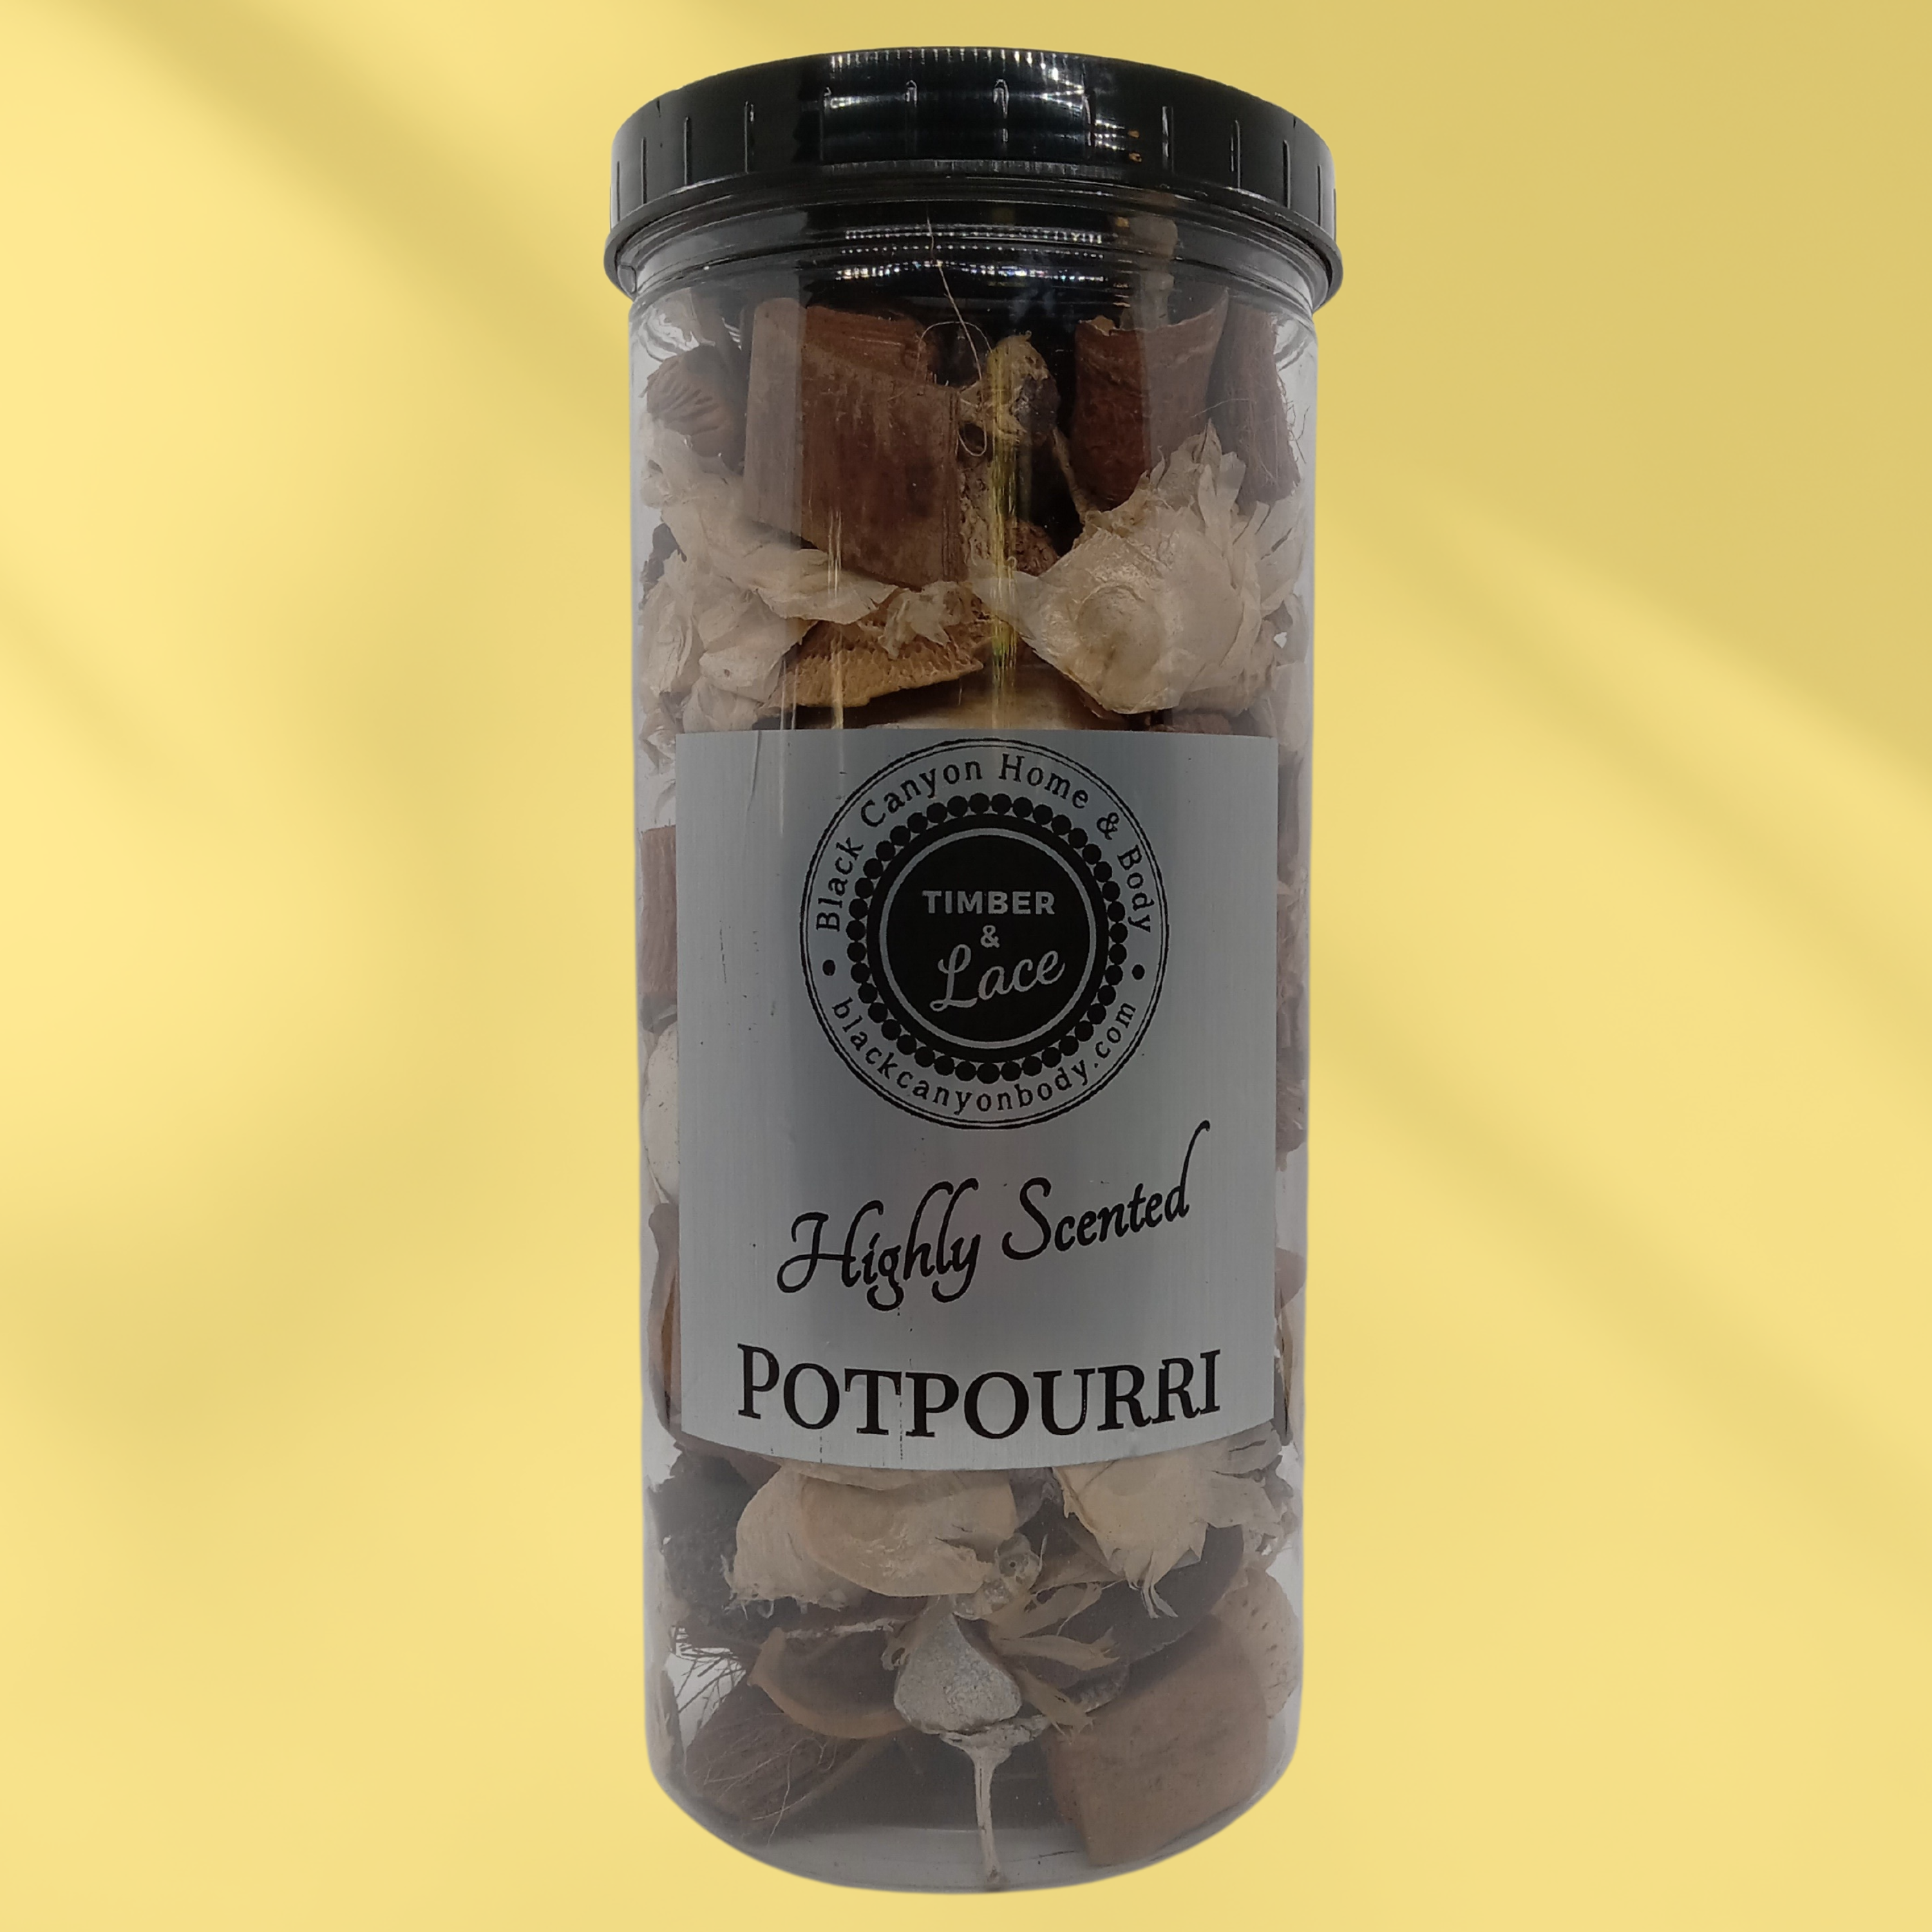 Timber & Lace Caramel Popcorn Scented Potpourri